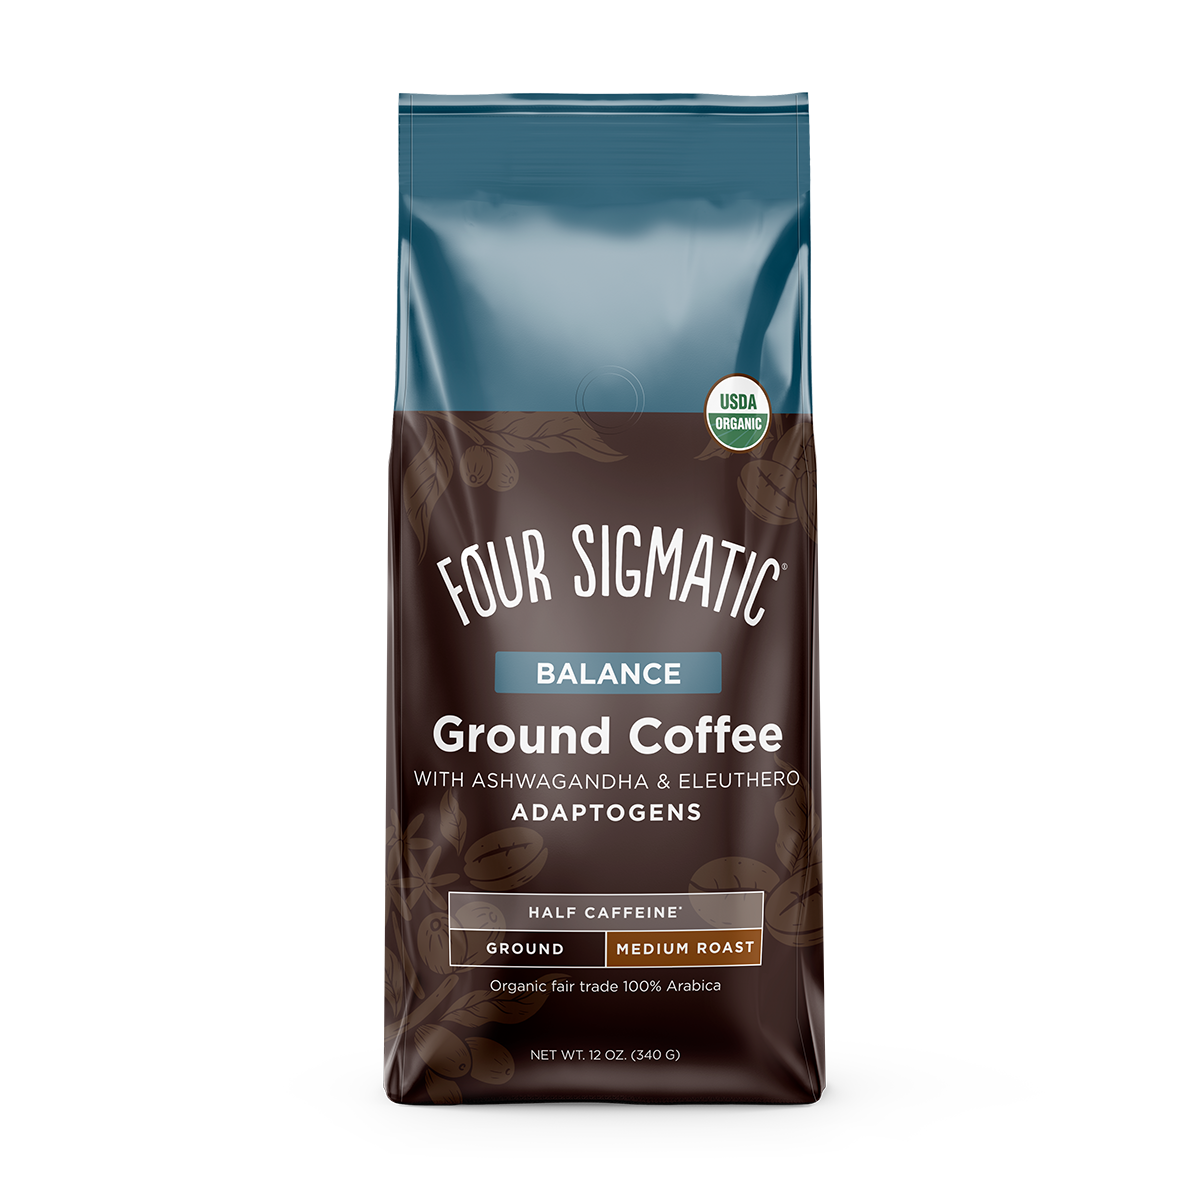 Four Sigmatic Balance Ground Coffee with Ashwagandha & Eleuthero 8 units per case 12.0 oz